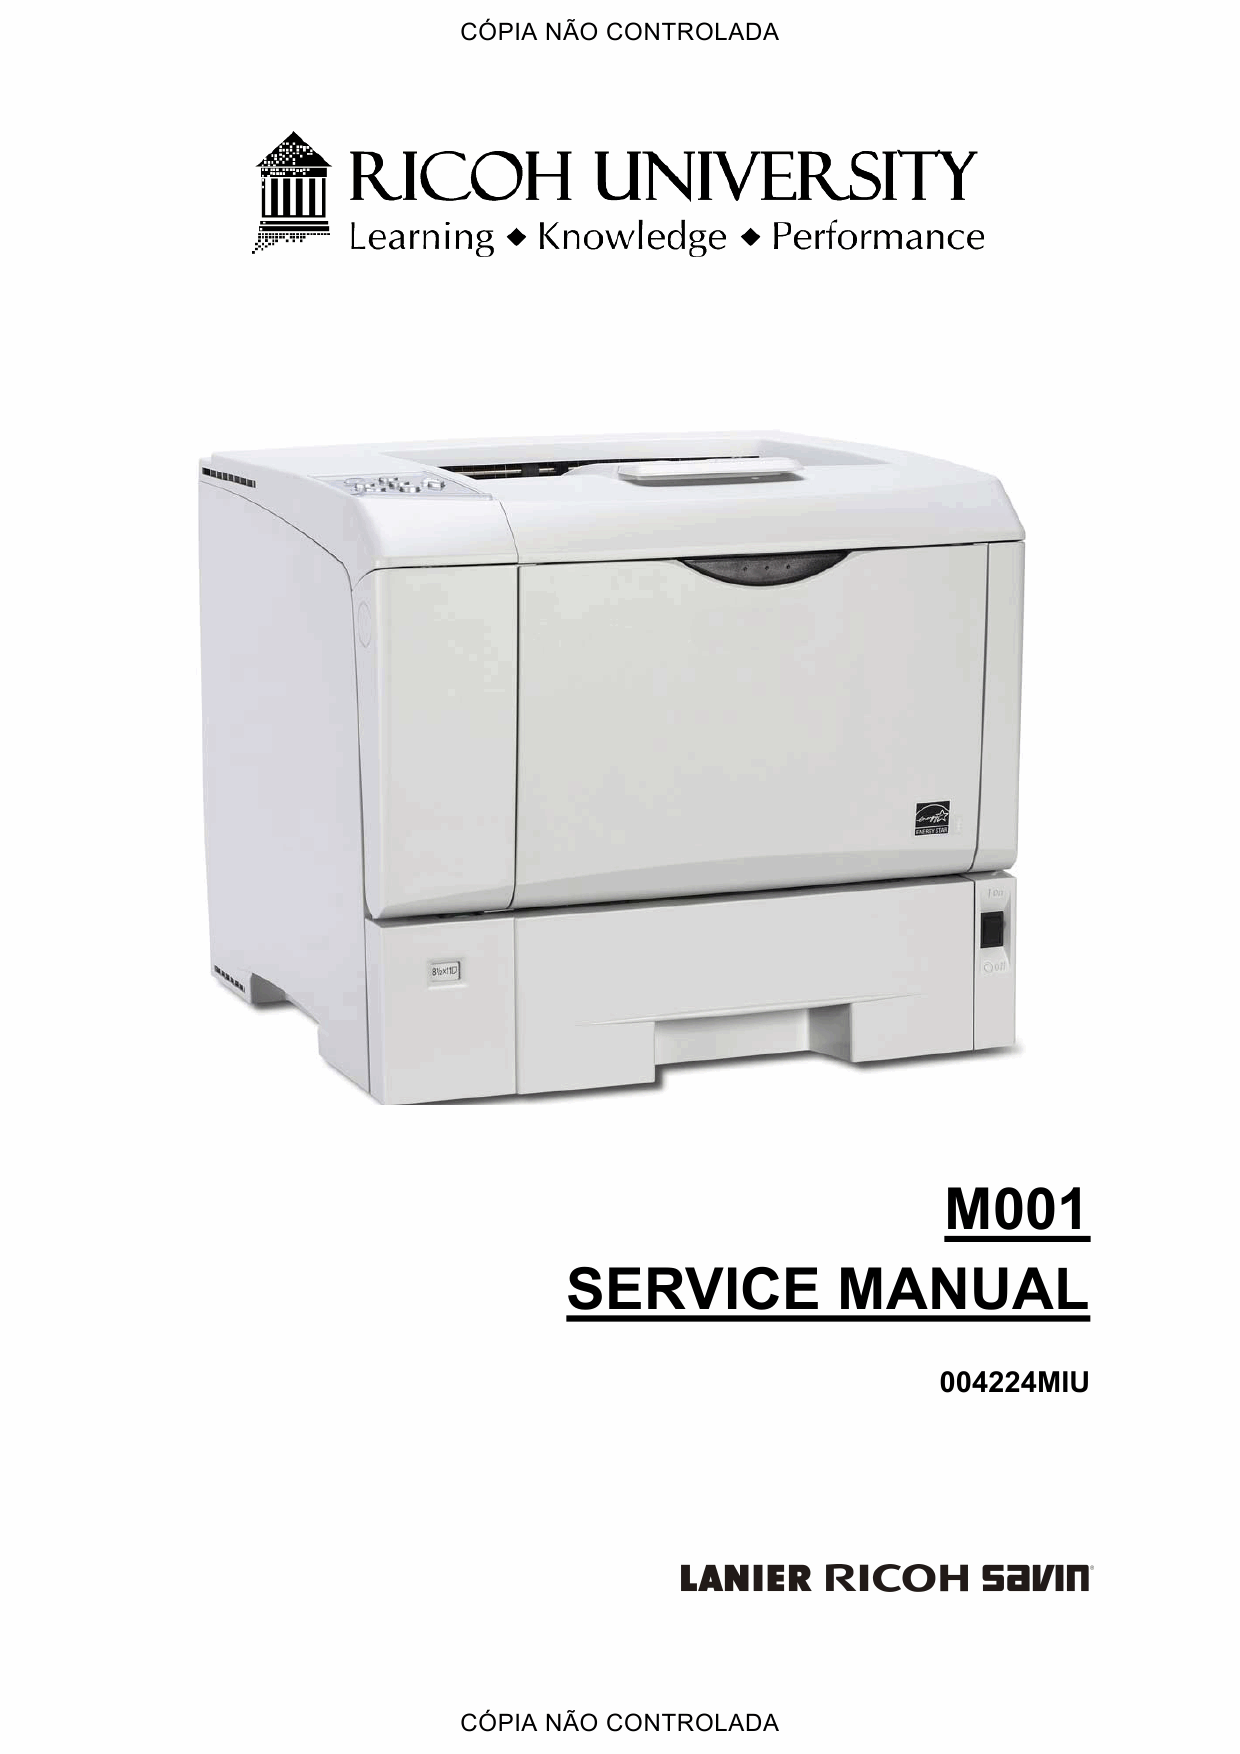 RICOH Aficio SP-4200N M001 Service Manual-1